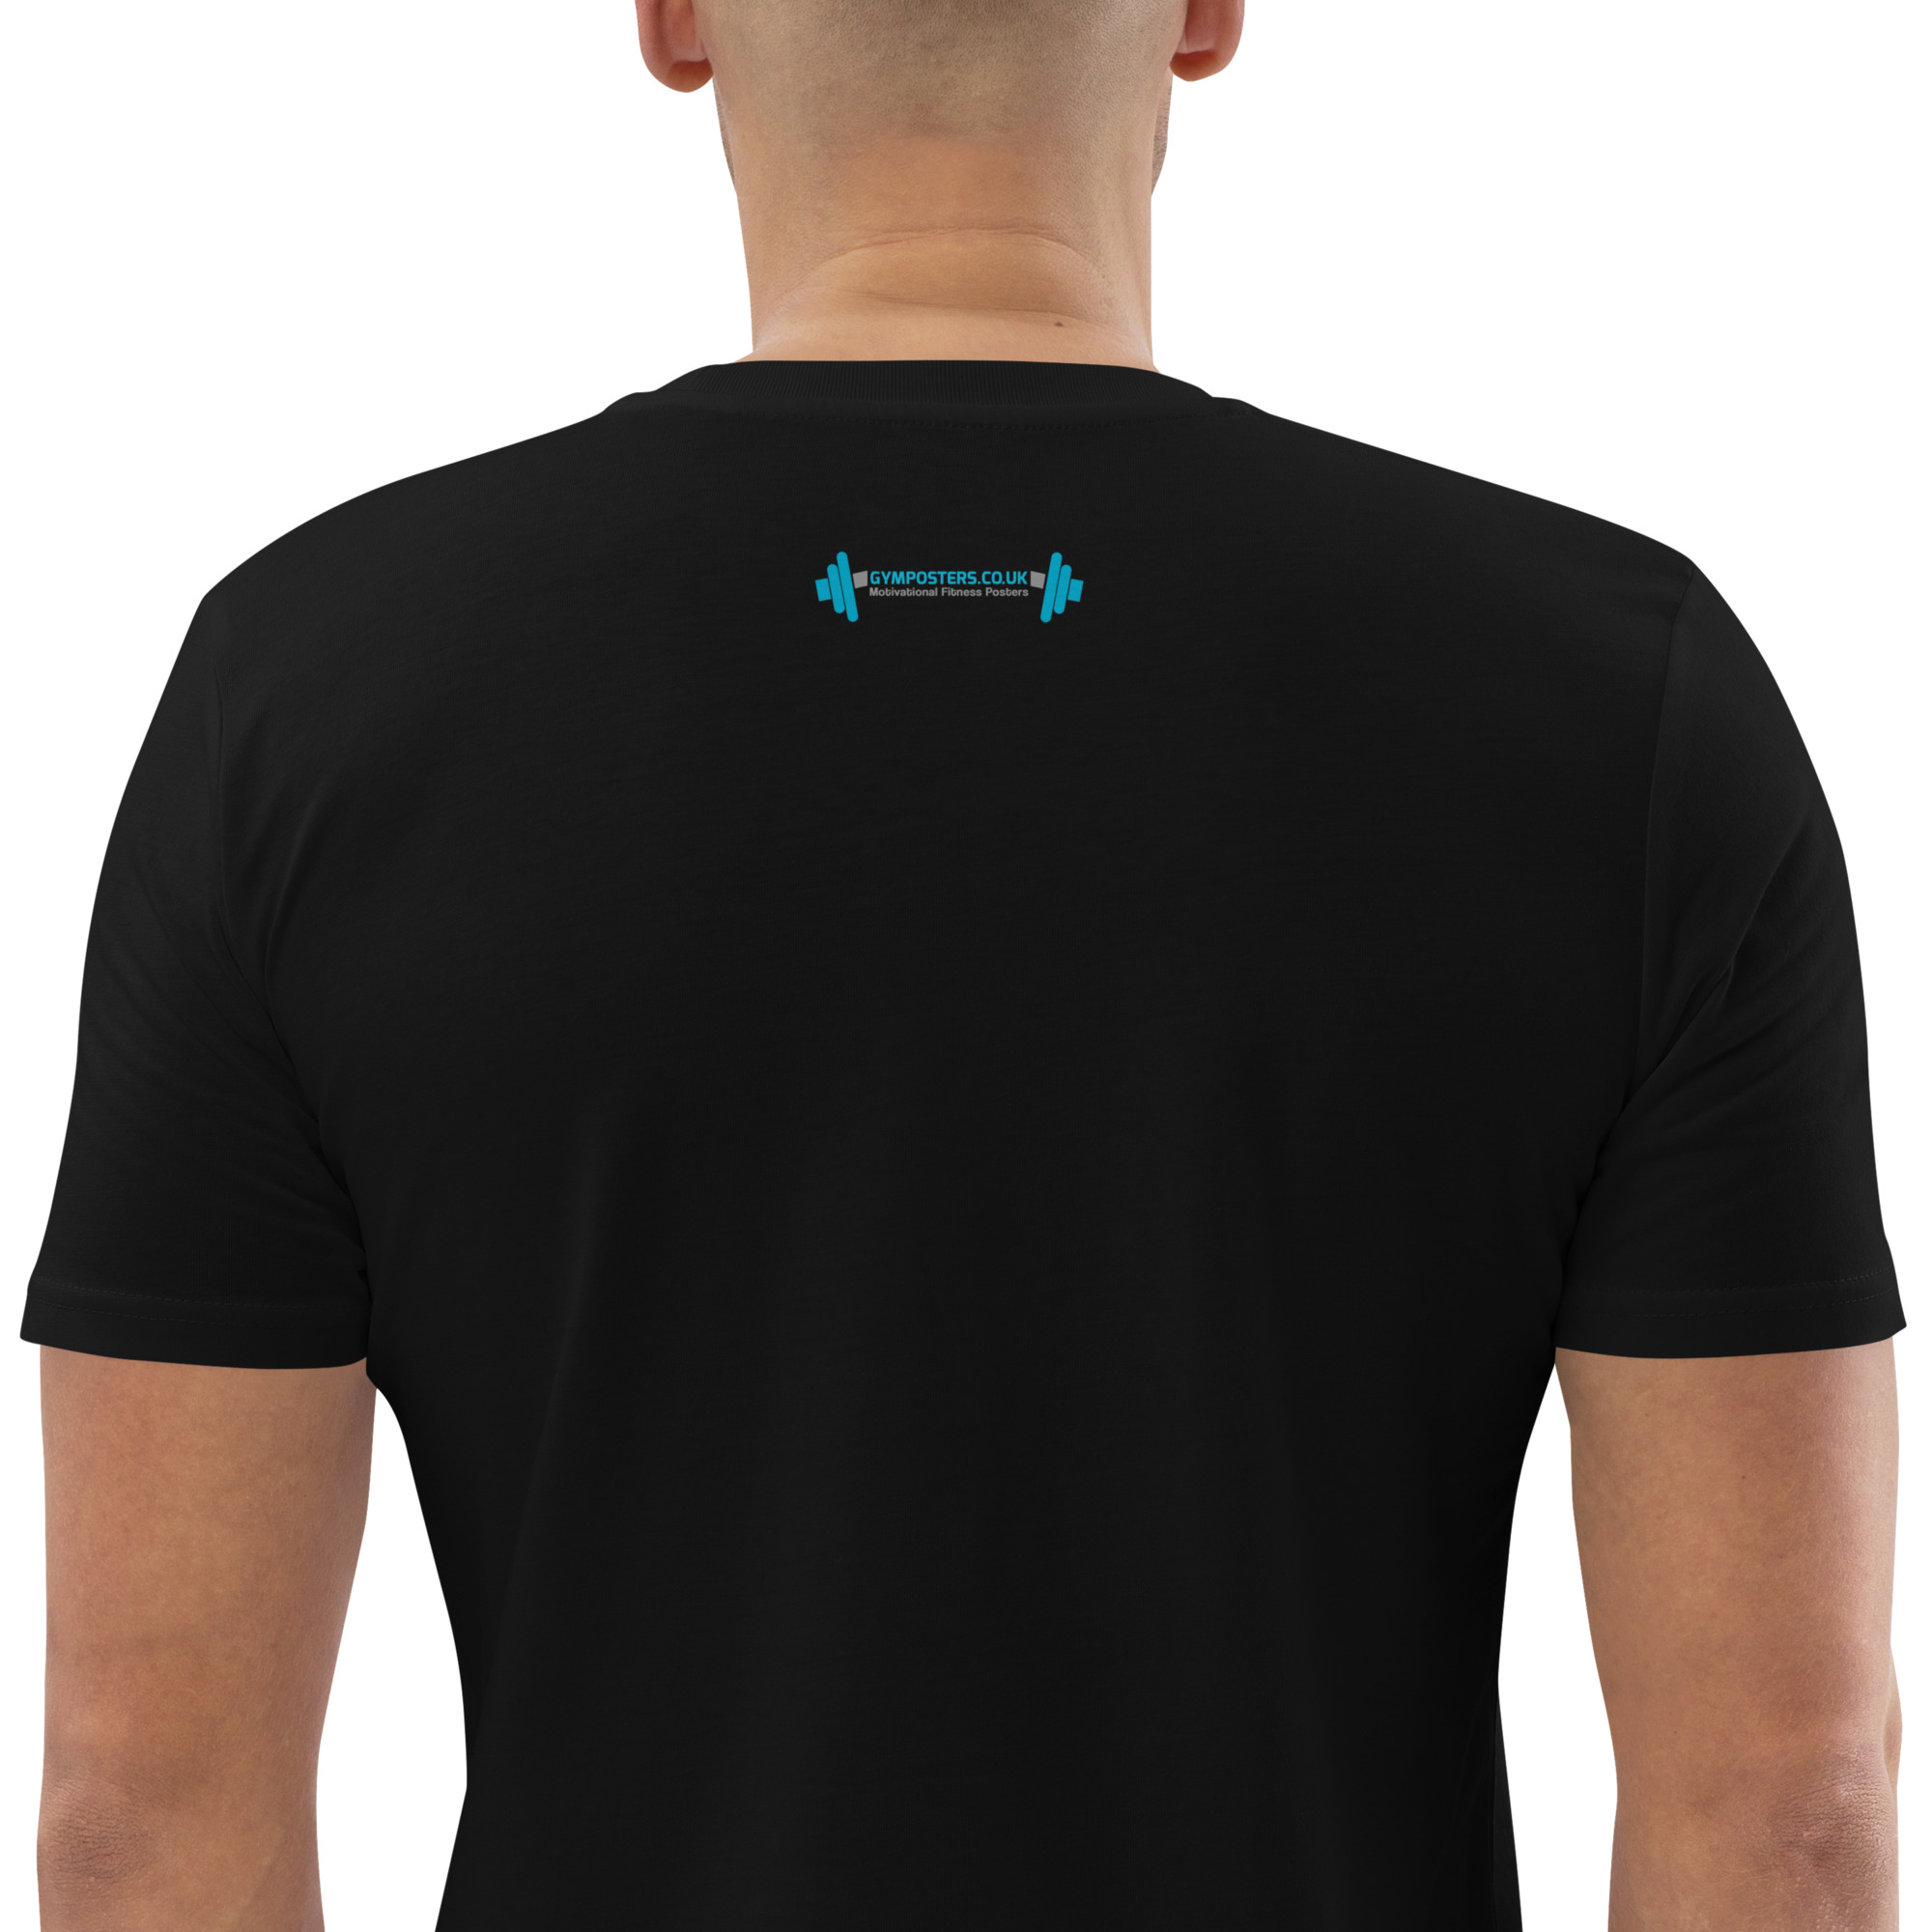 unisex-organic-cotton-t-shirt-black-zoomed-in-2-65785e19abfc1.jpg